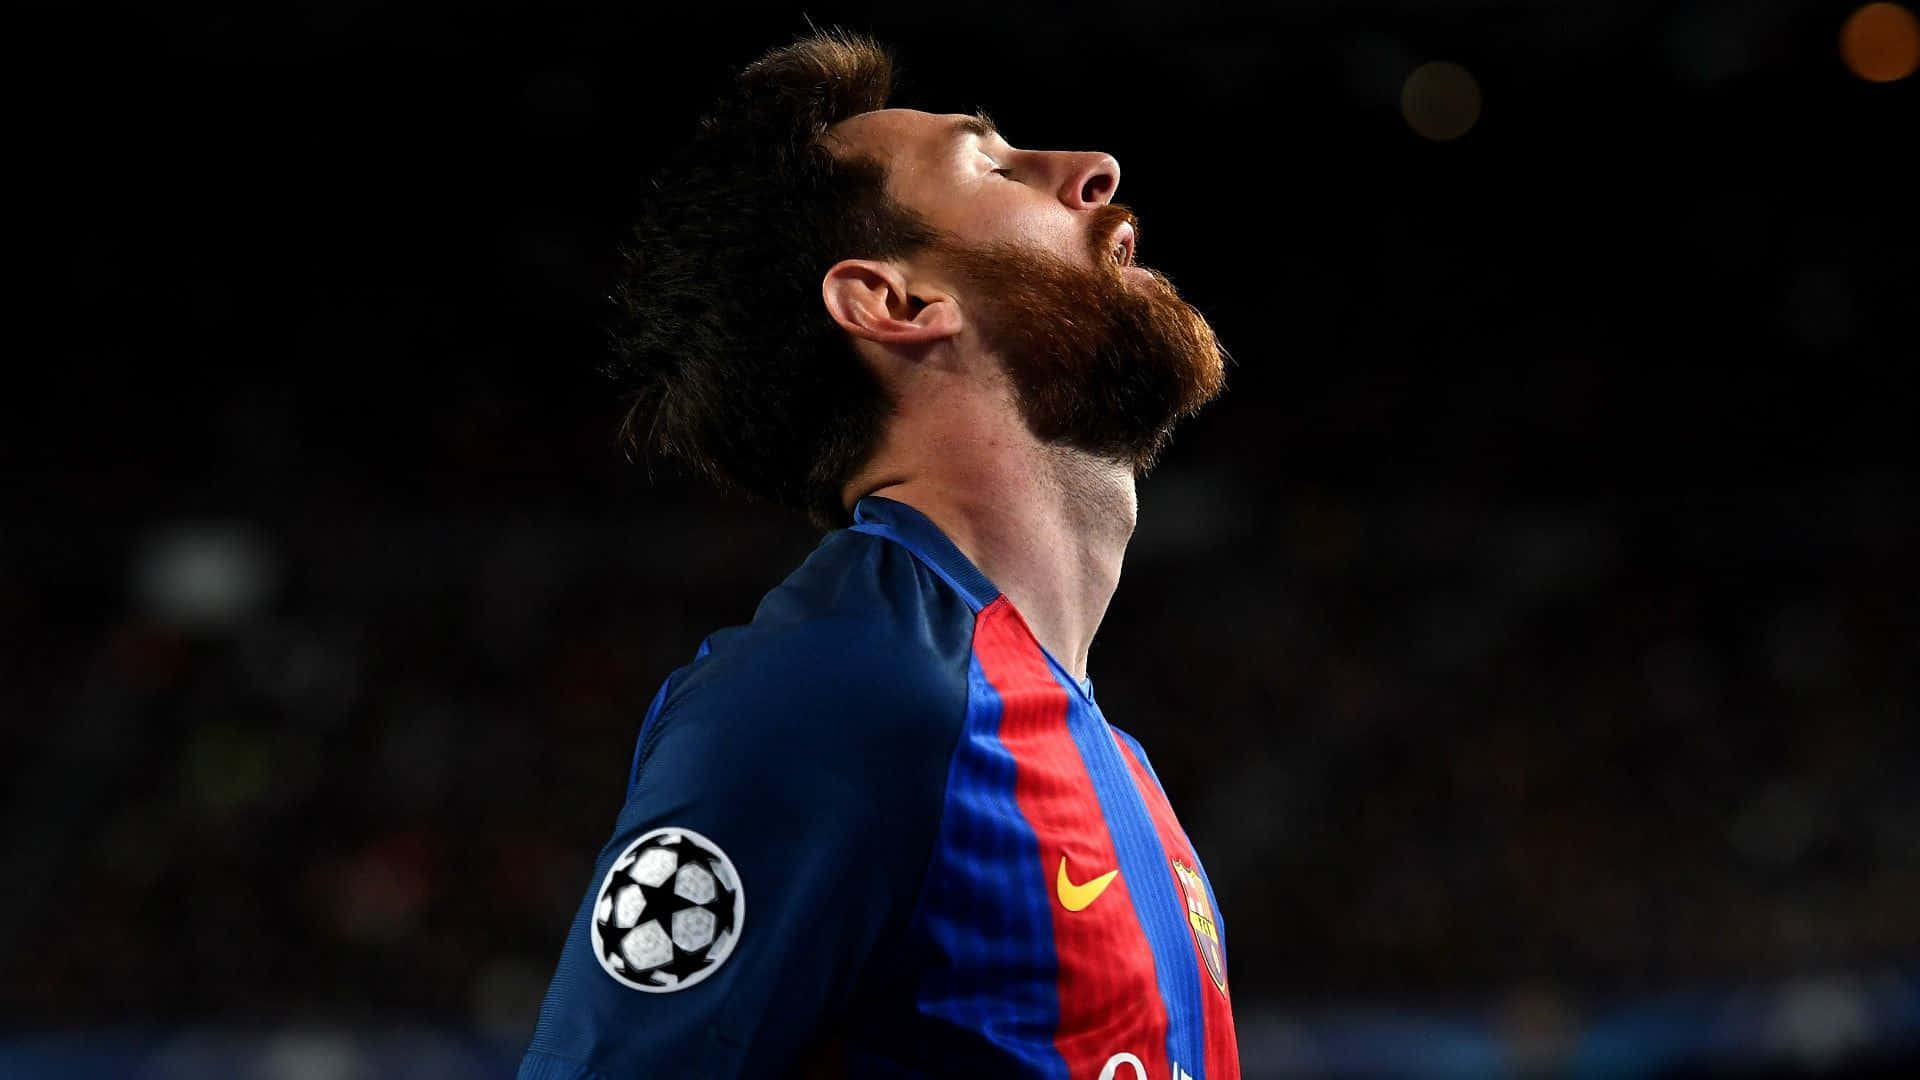 Image   Lionel Messi – The Legendary Footballer